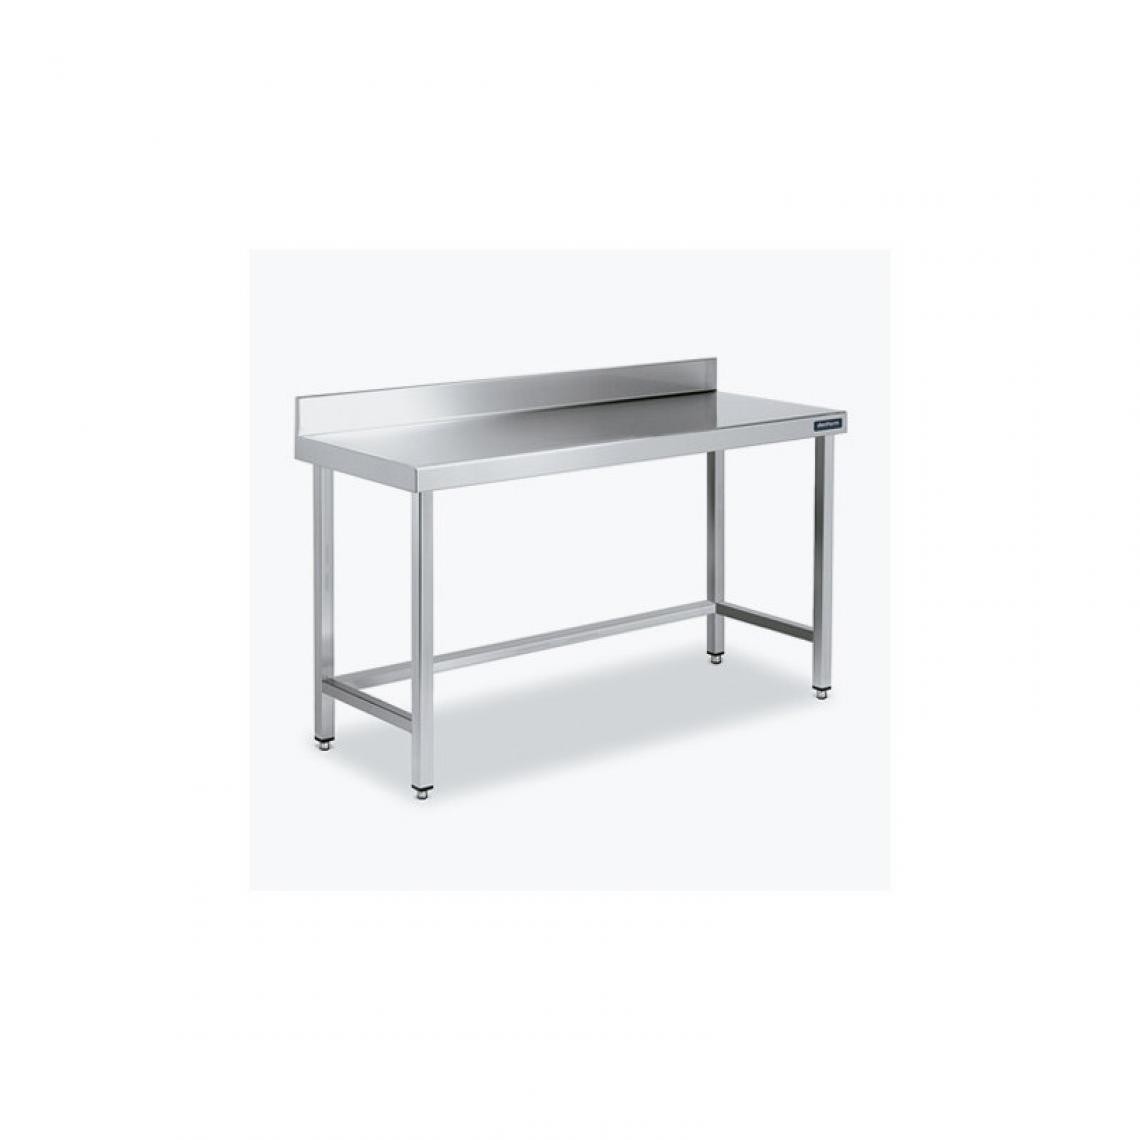 DISTFORM - Table Adossée 700x700 avec Renforts - Distform - Inox 18/10900x800x850mm - Tables à manger